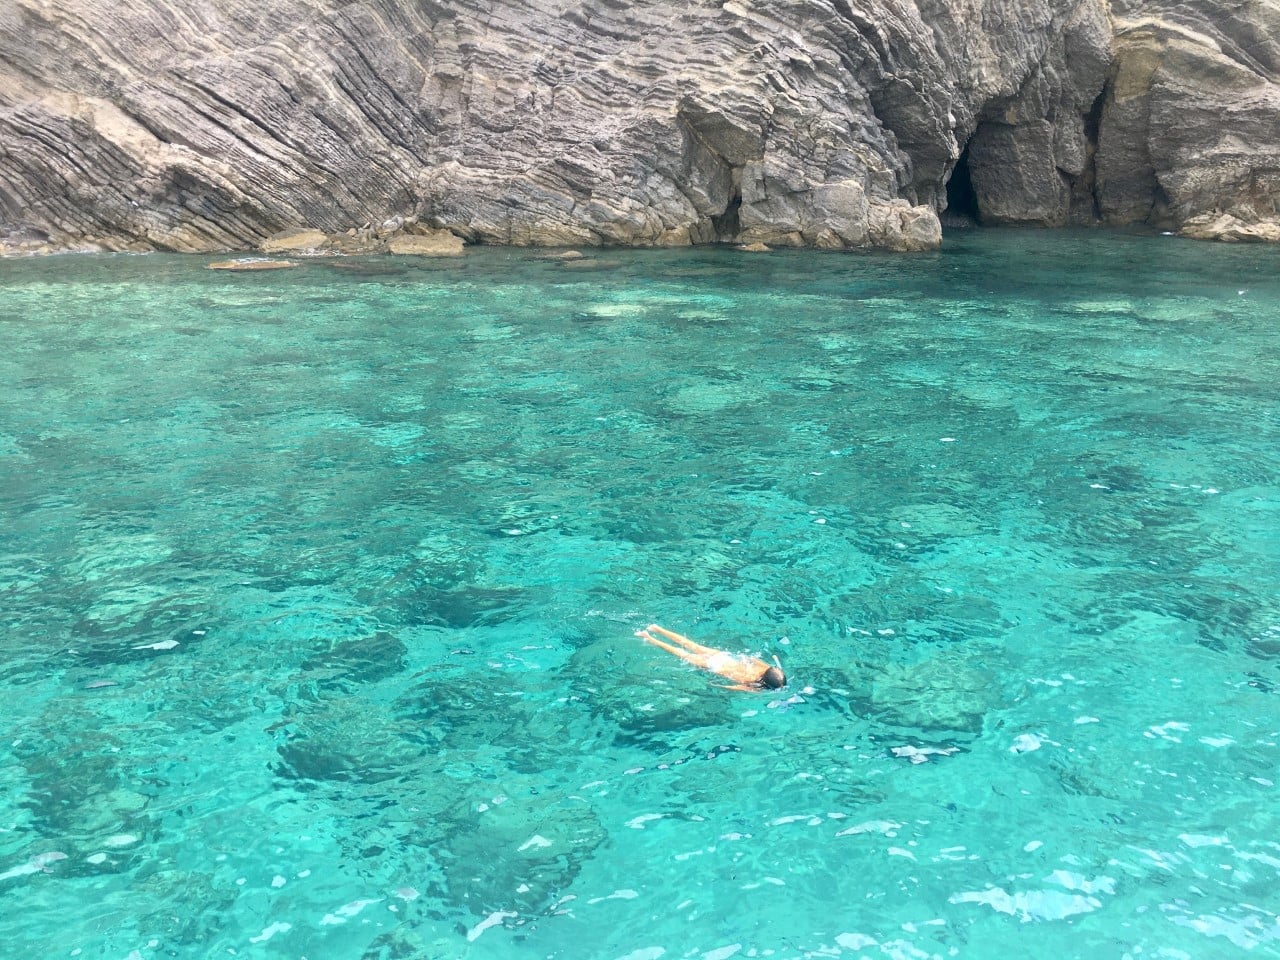 alquiler de catamaran para familia en Ibiza - chico bañándose en aguas cristalinas